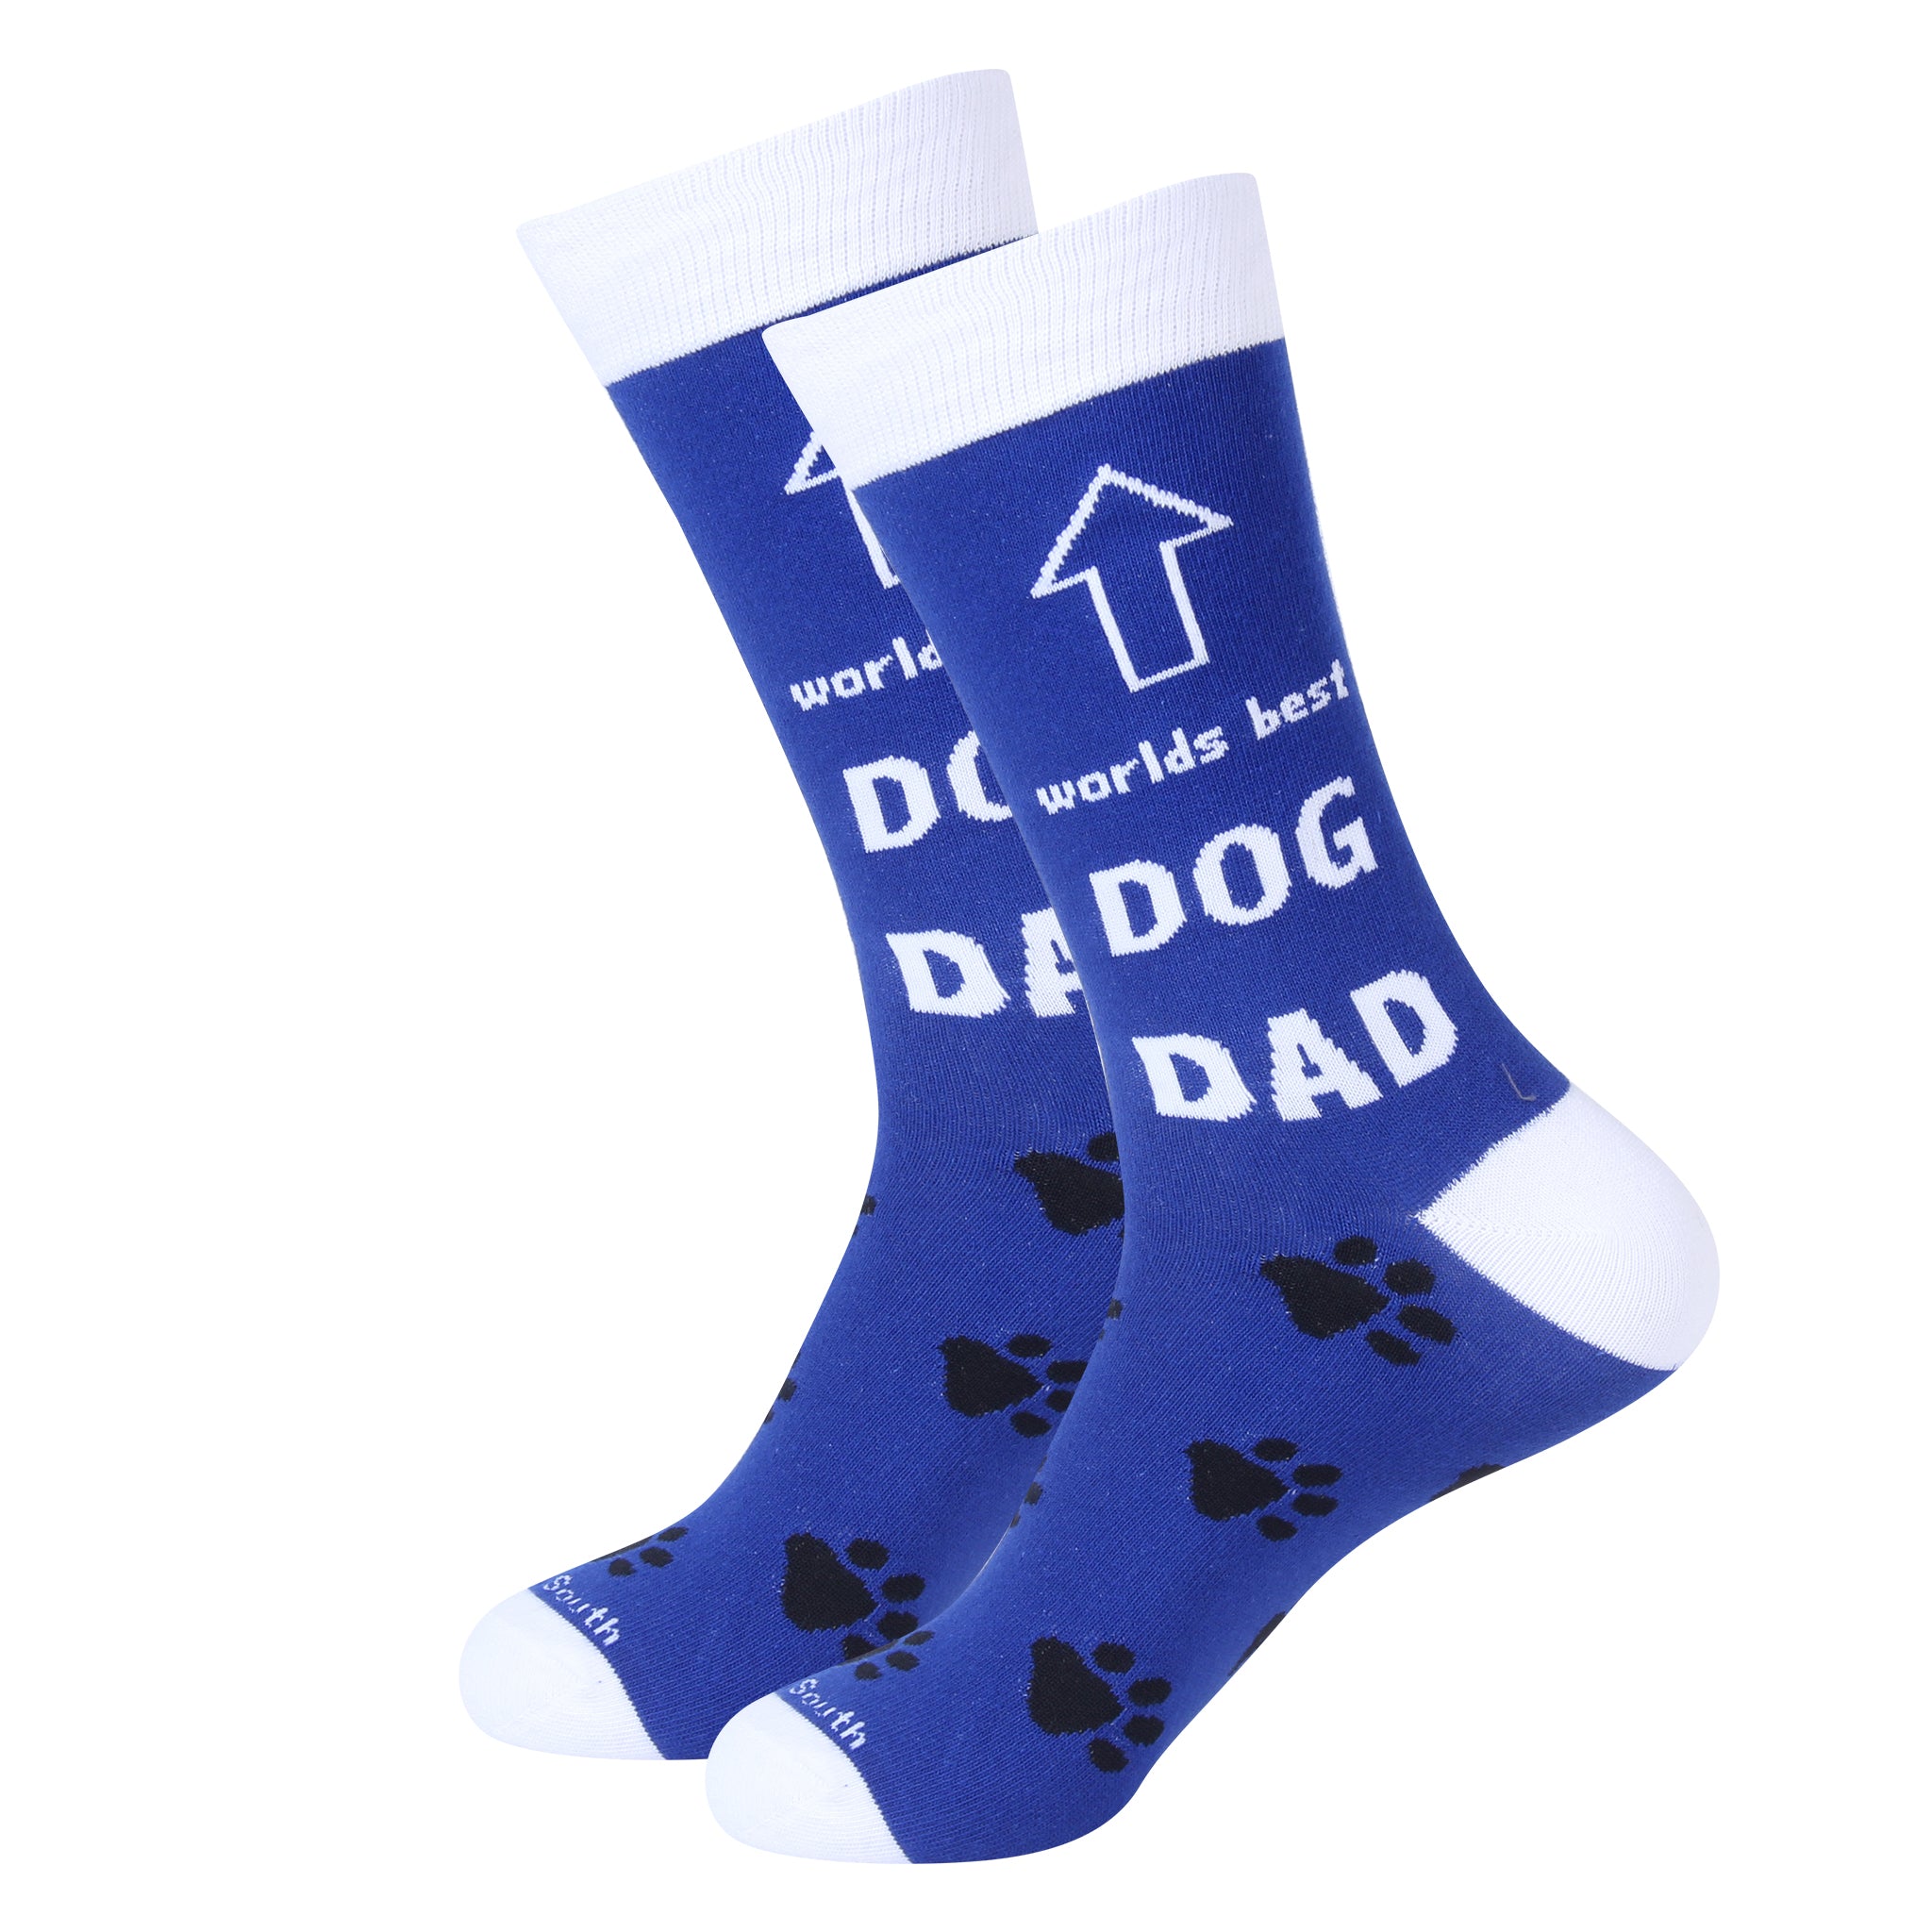 Worlds Best Dog Dad Socks